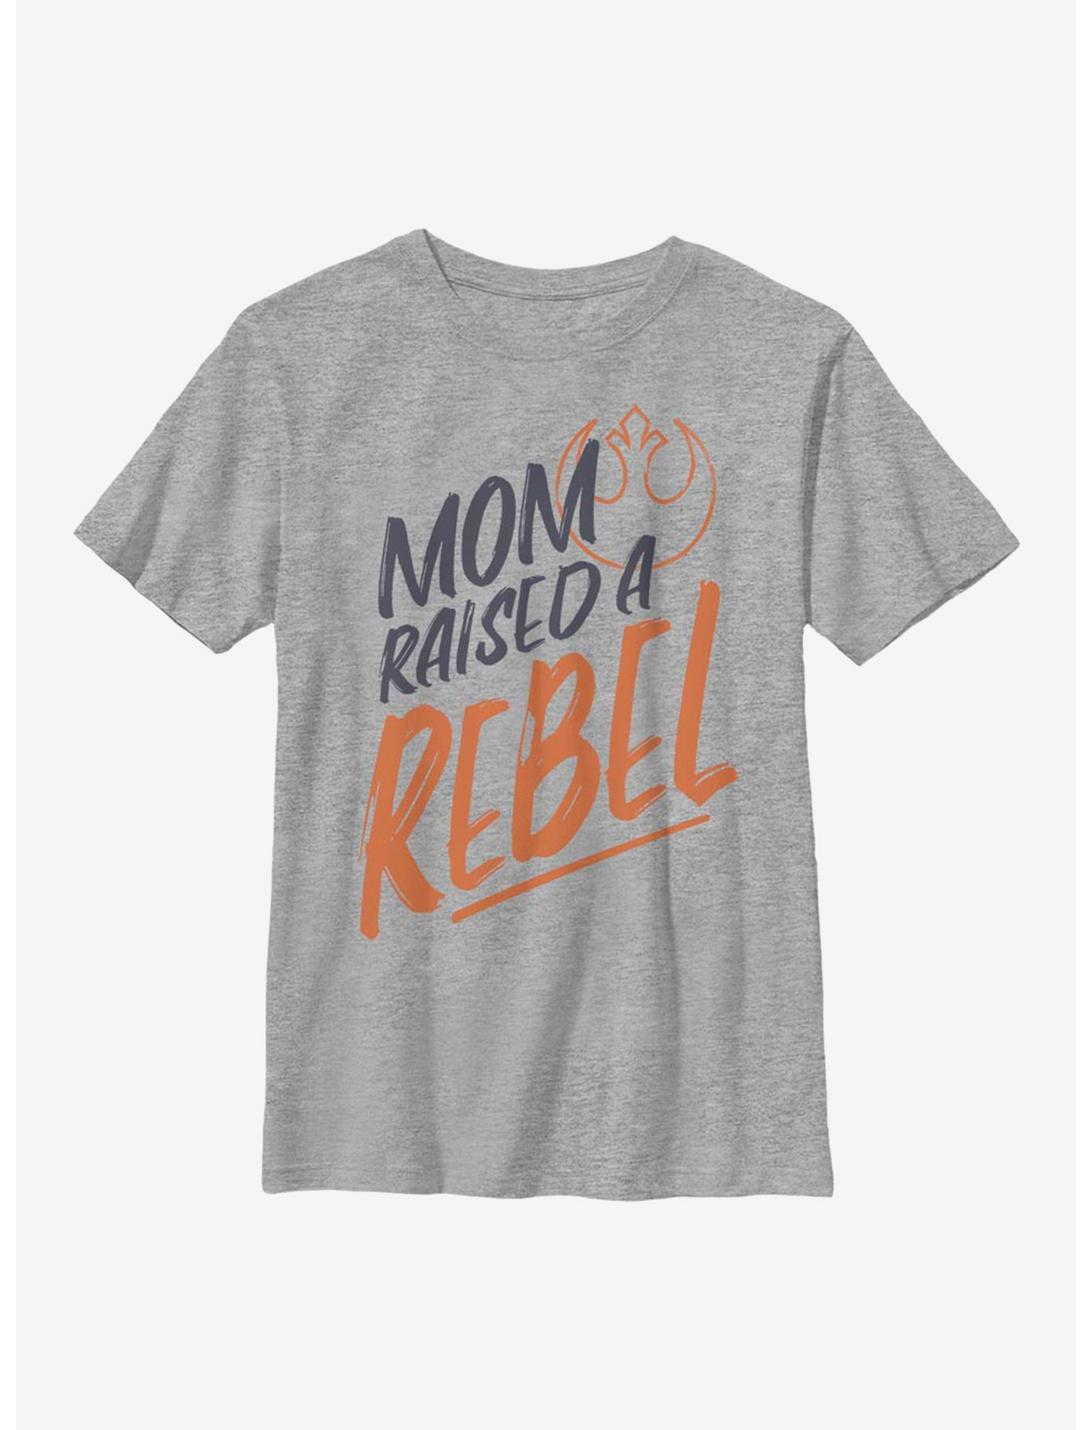 Star Wars Rebel Kid Youth T-Shirt, ATH HTR, hi-res